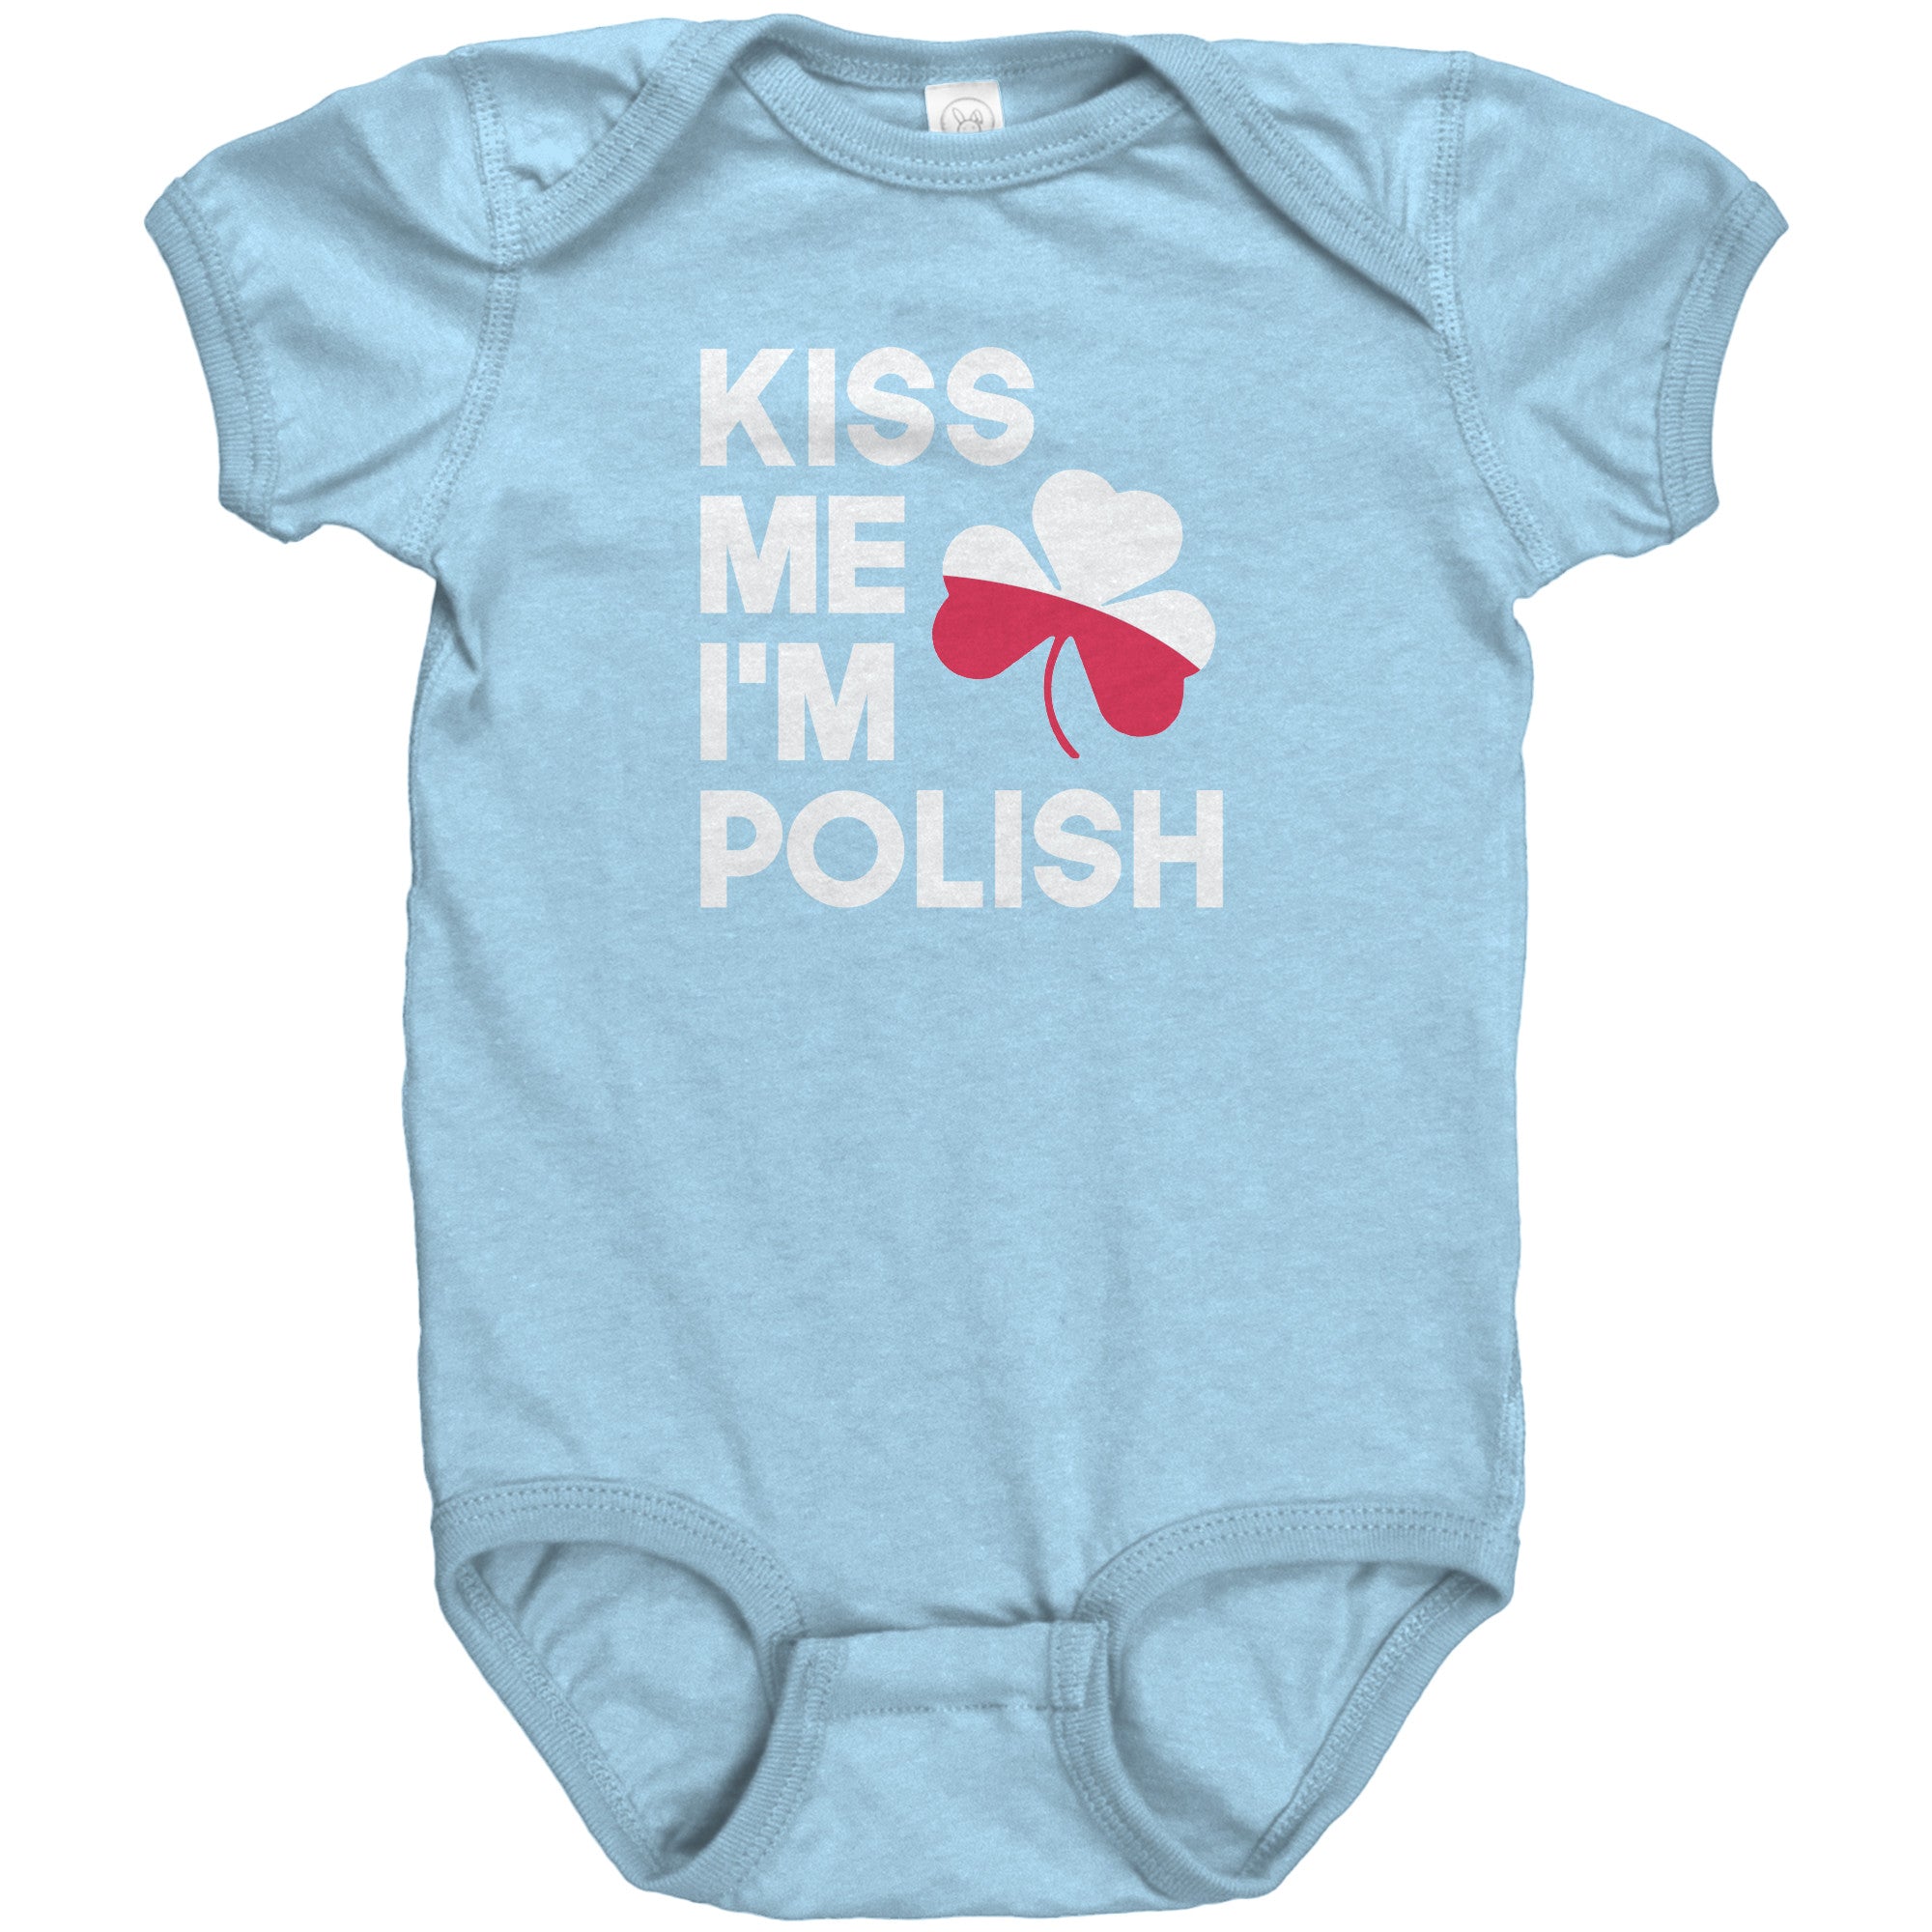 Kiss me I'm polish baby bodysuit-multiple colors – My Polish Heritage